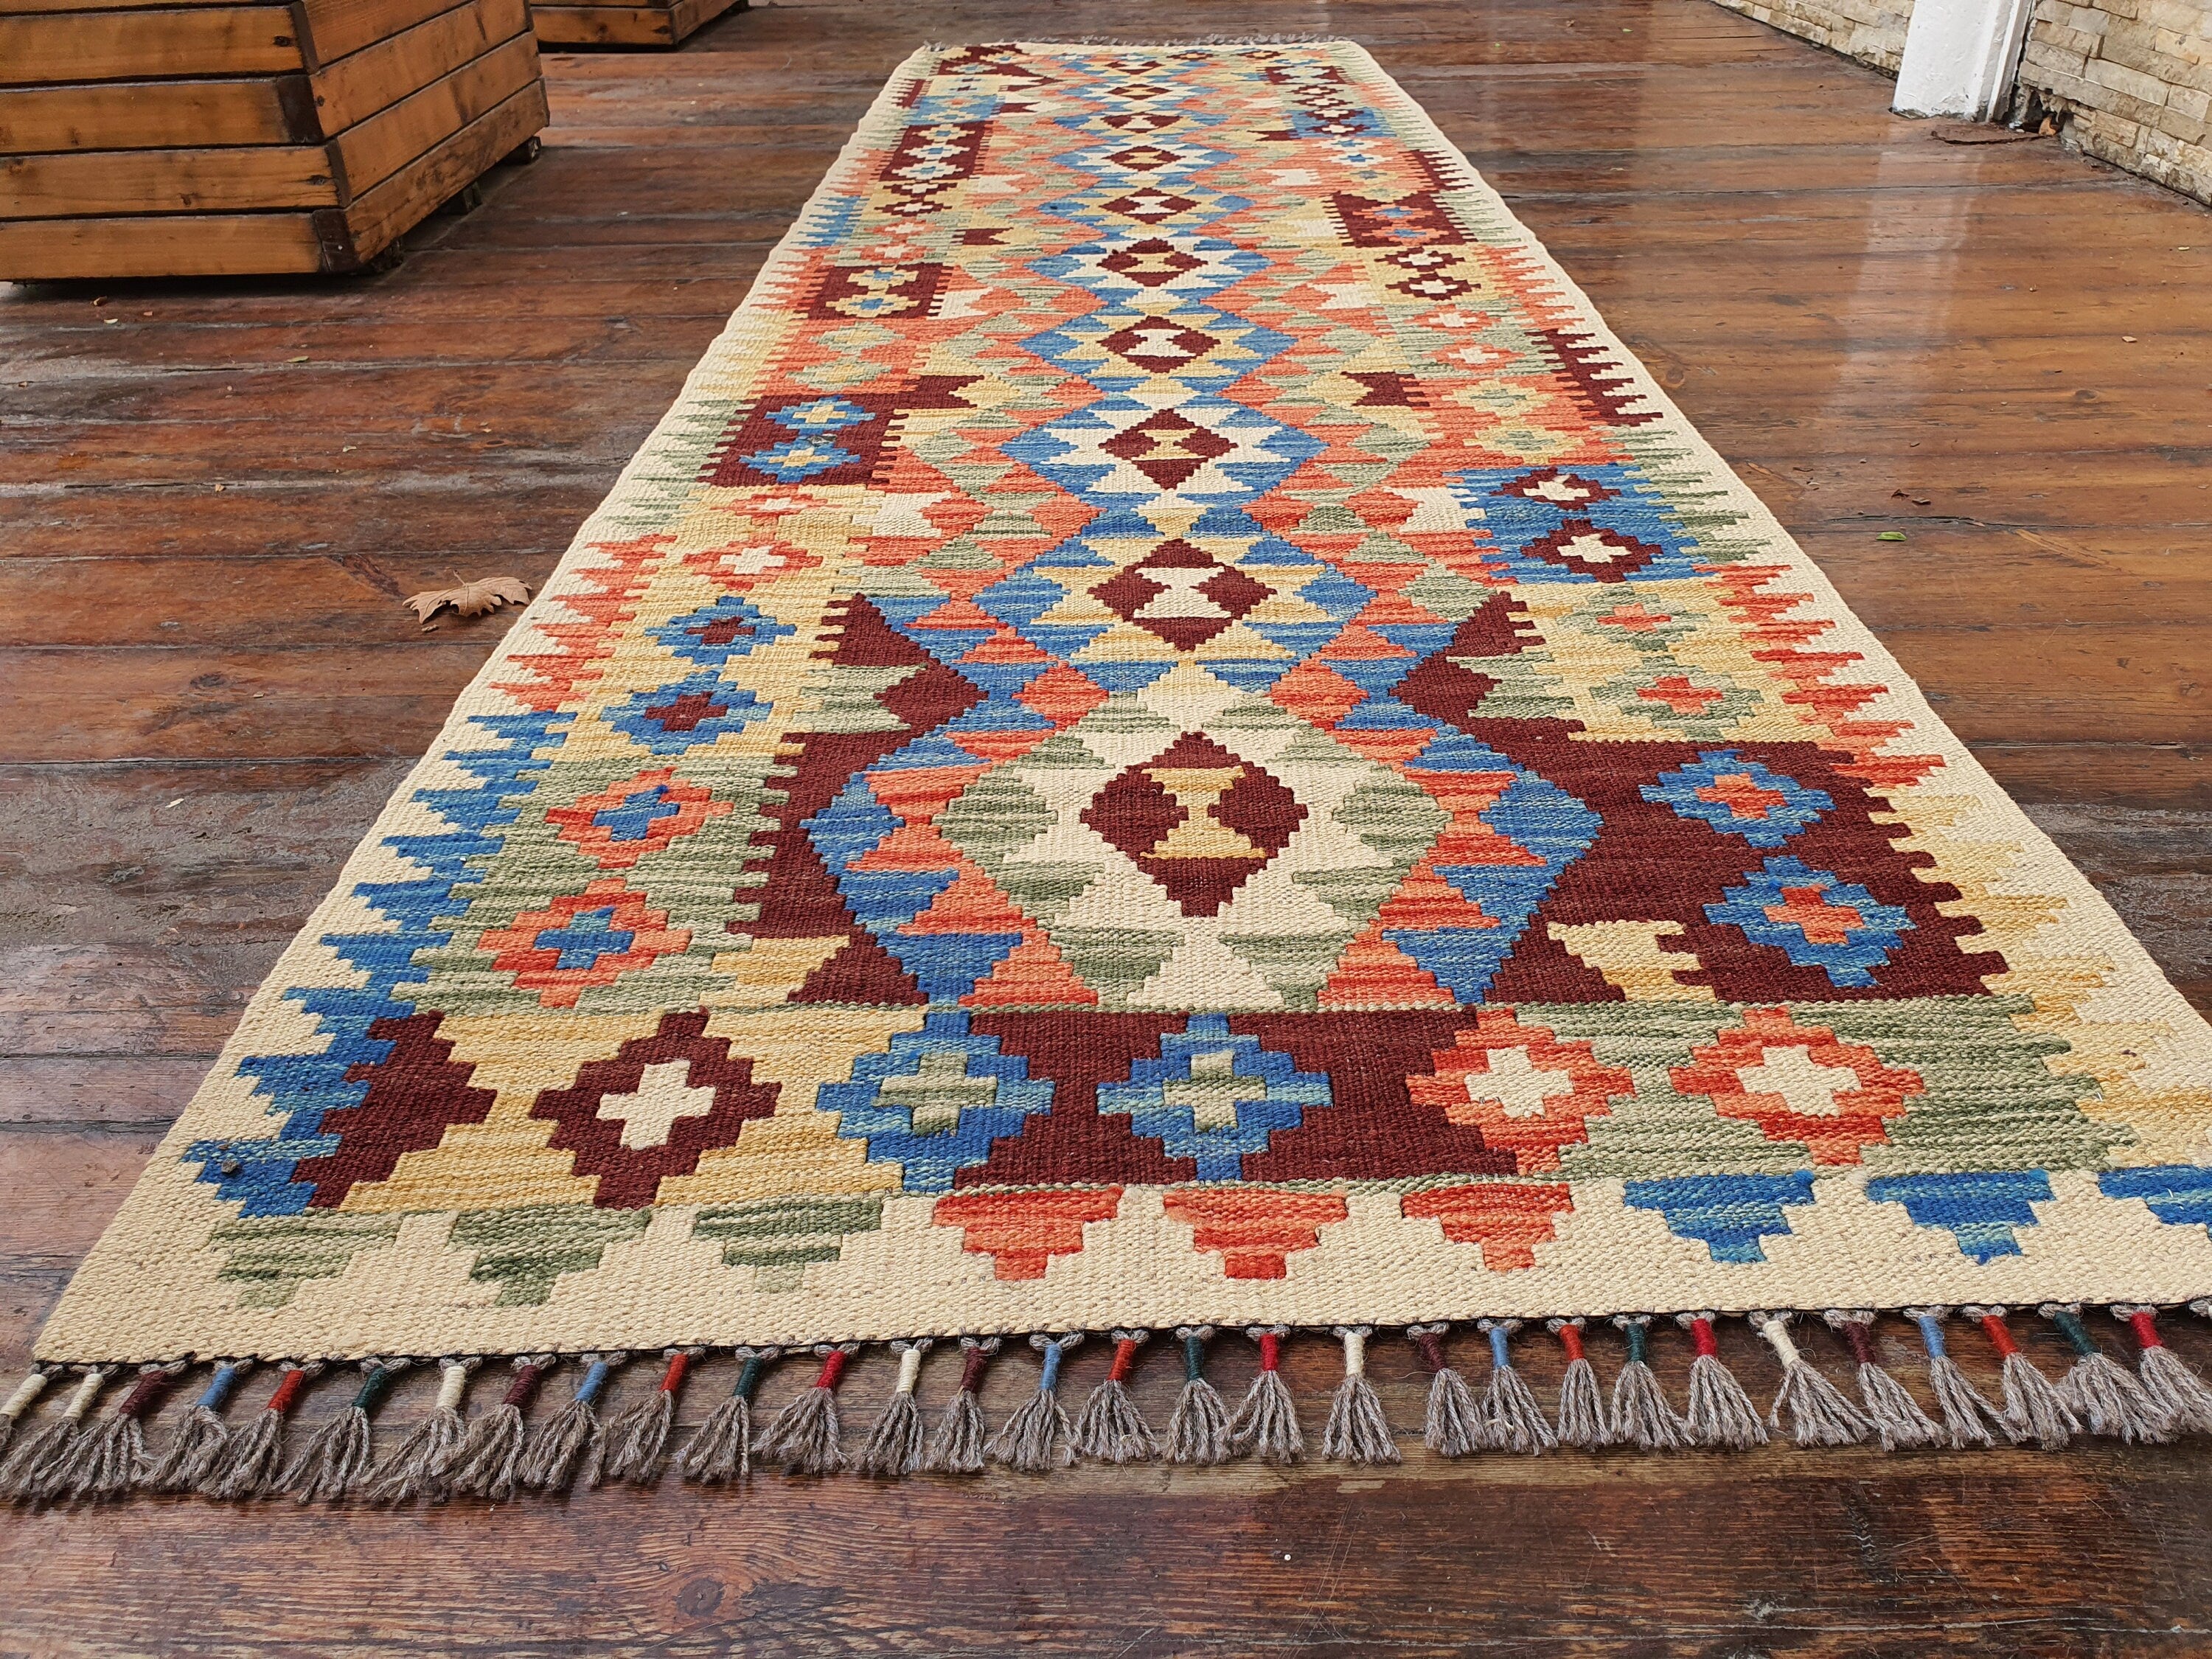 Vintage Kilim Runner Rug, 6 x 2 ft Blue Beige Afghan Hallway Kitchen Rug, Moroccan Boho Rustic Persian Carpet Handmade Farmhouse Floor Decor